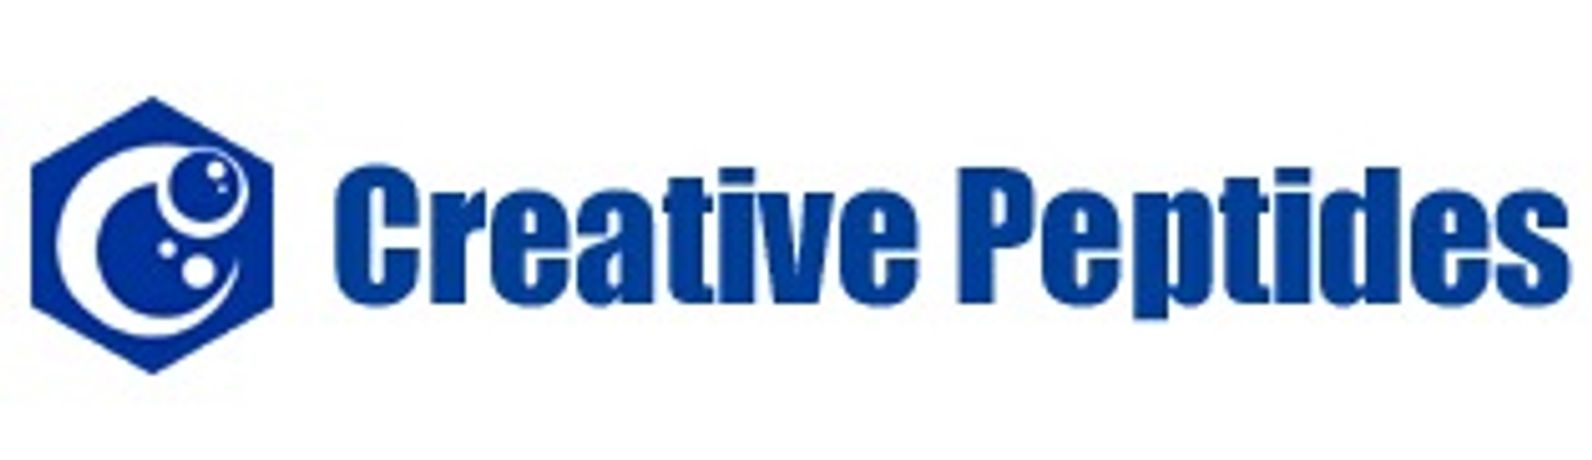 Creative Peptides - Creative Peptides Design Platform